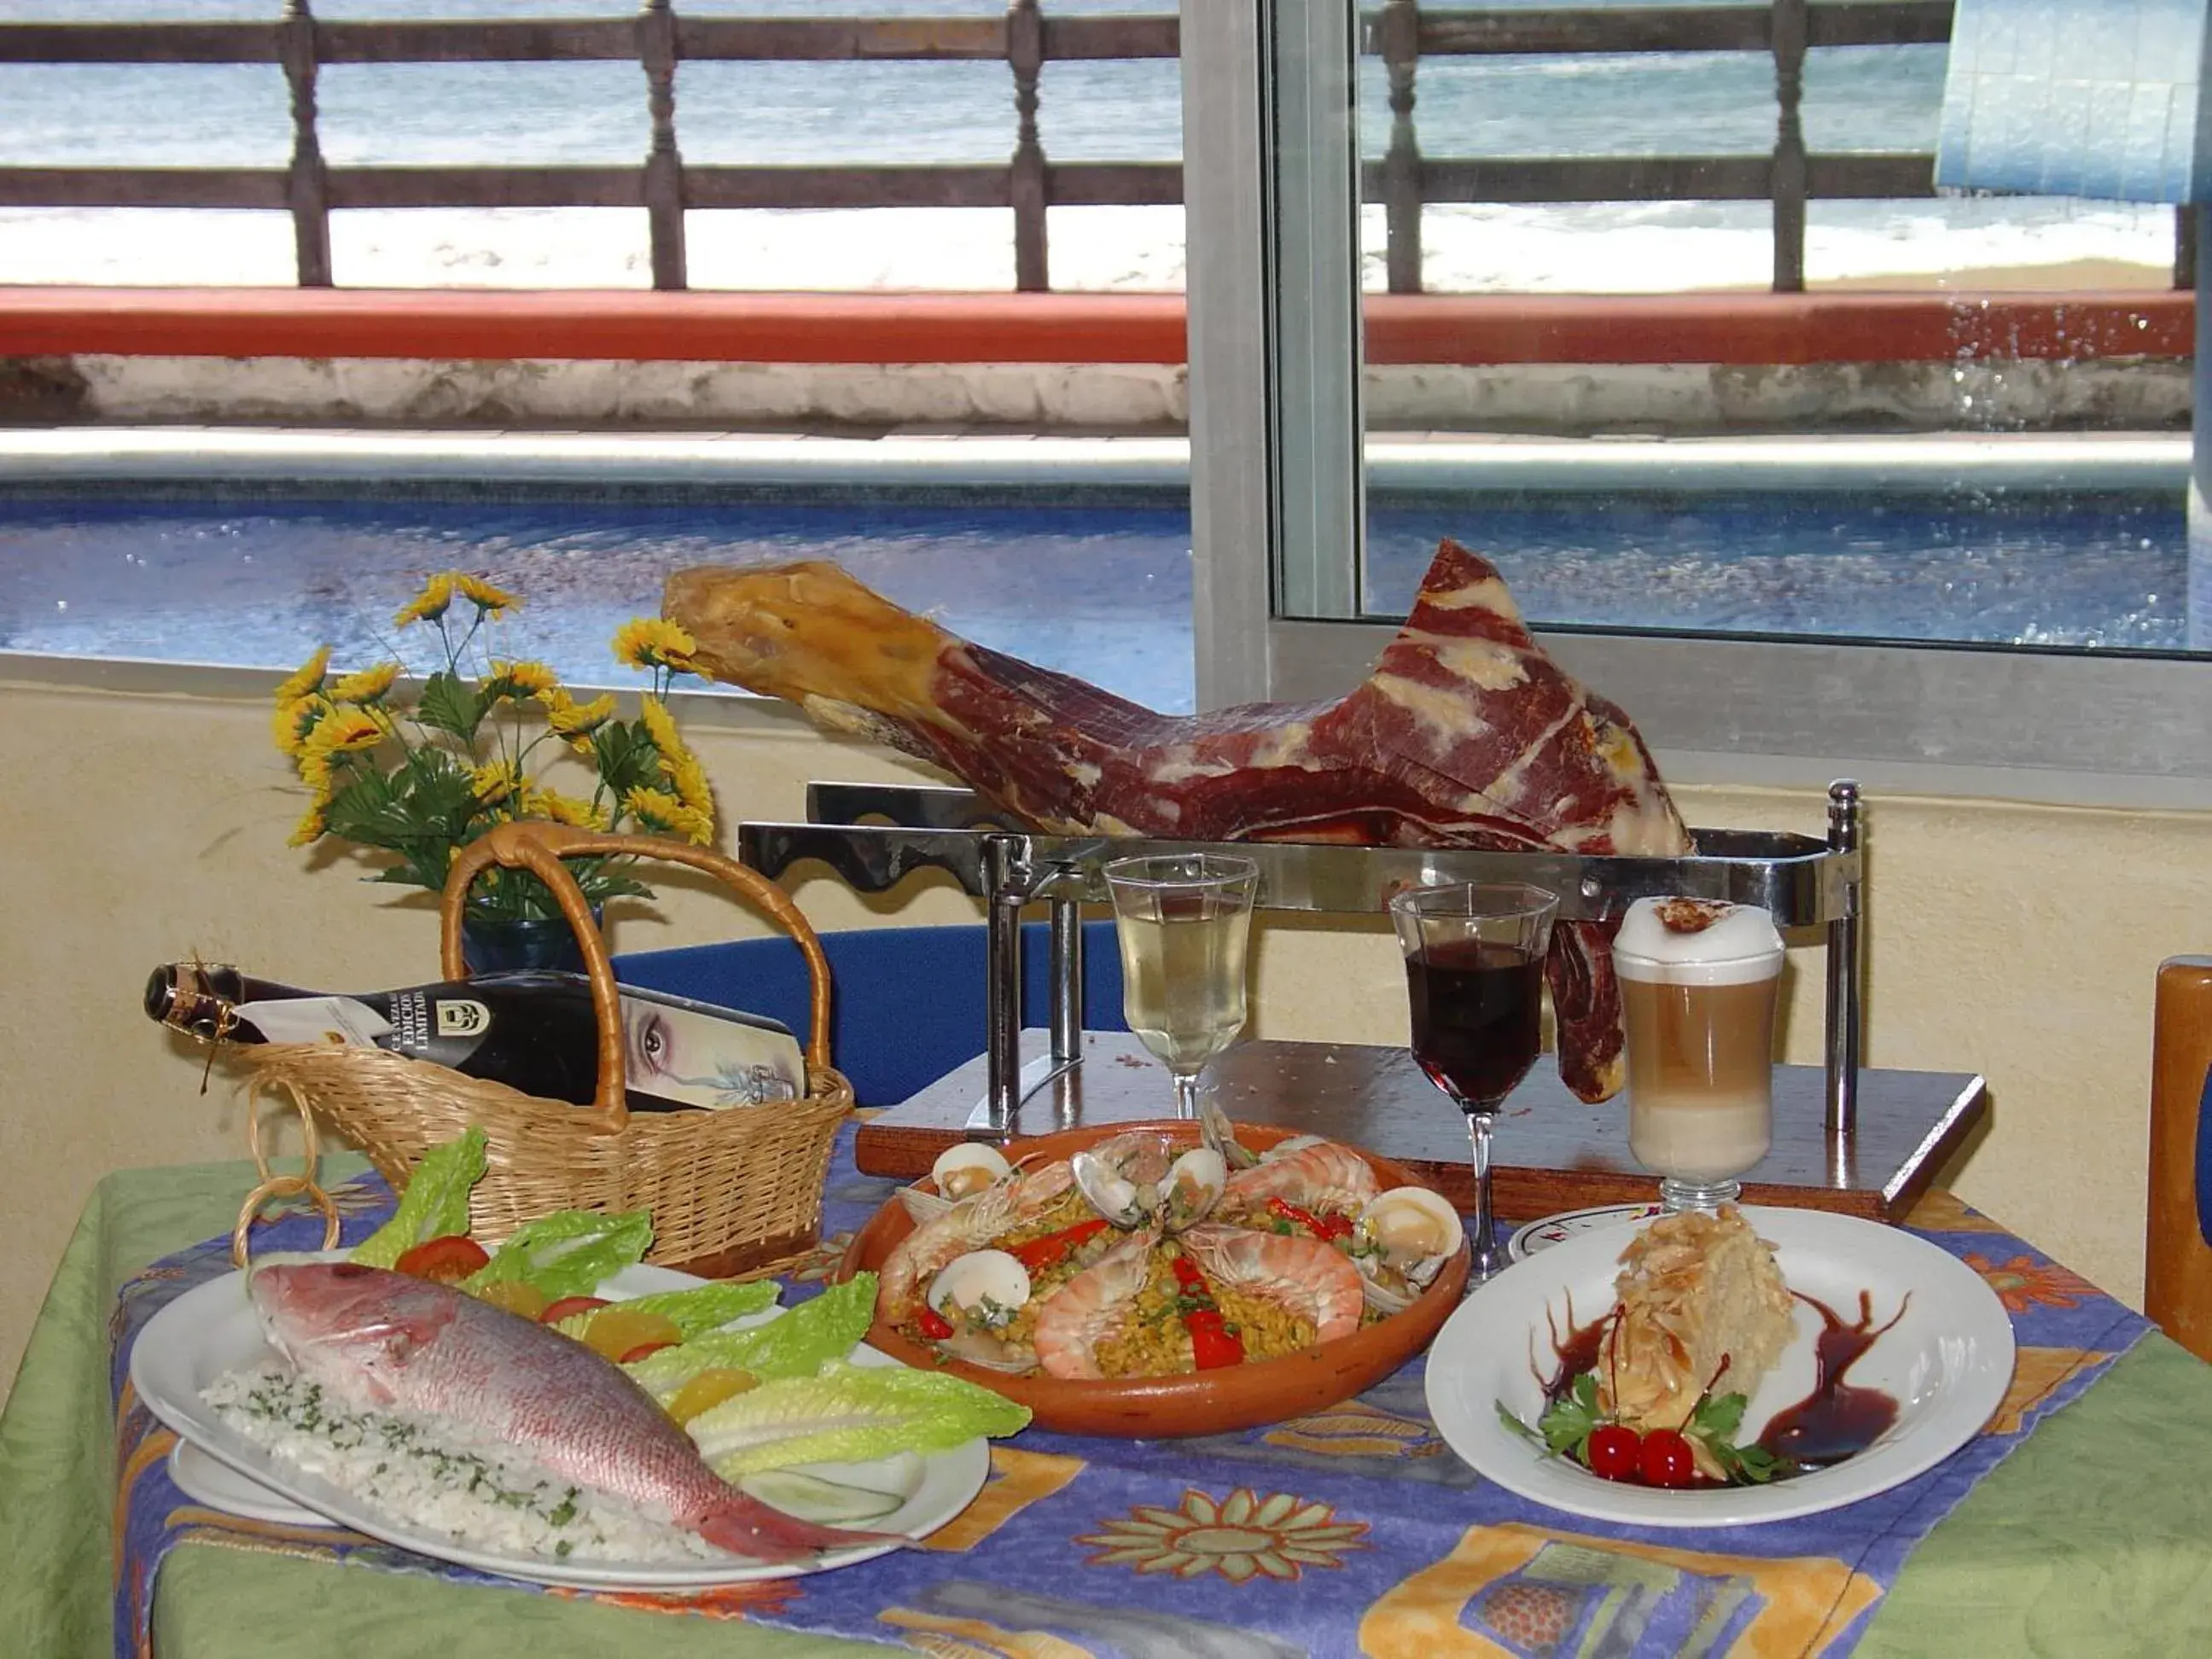 Food close-up in Hotel Marbella